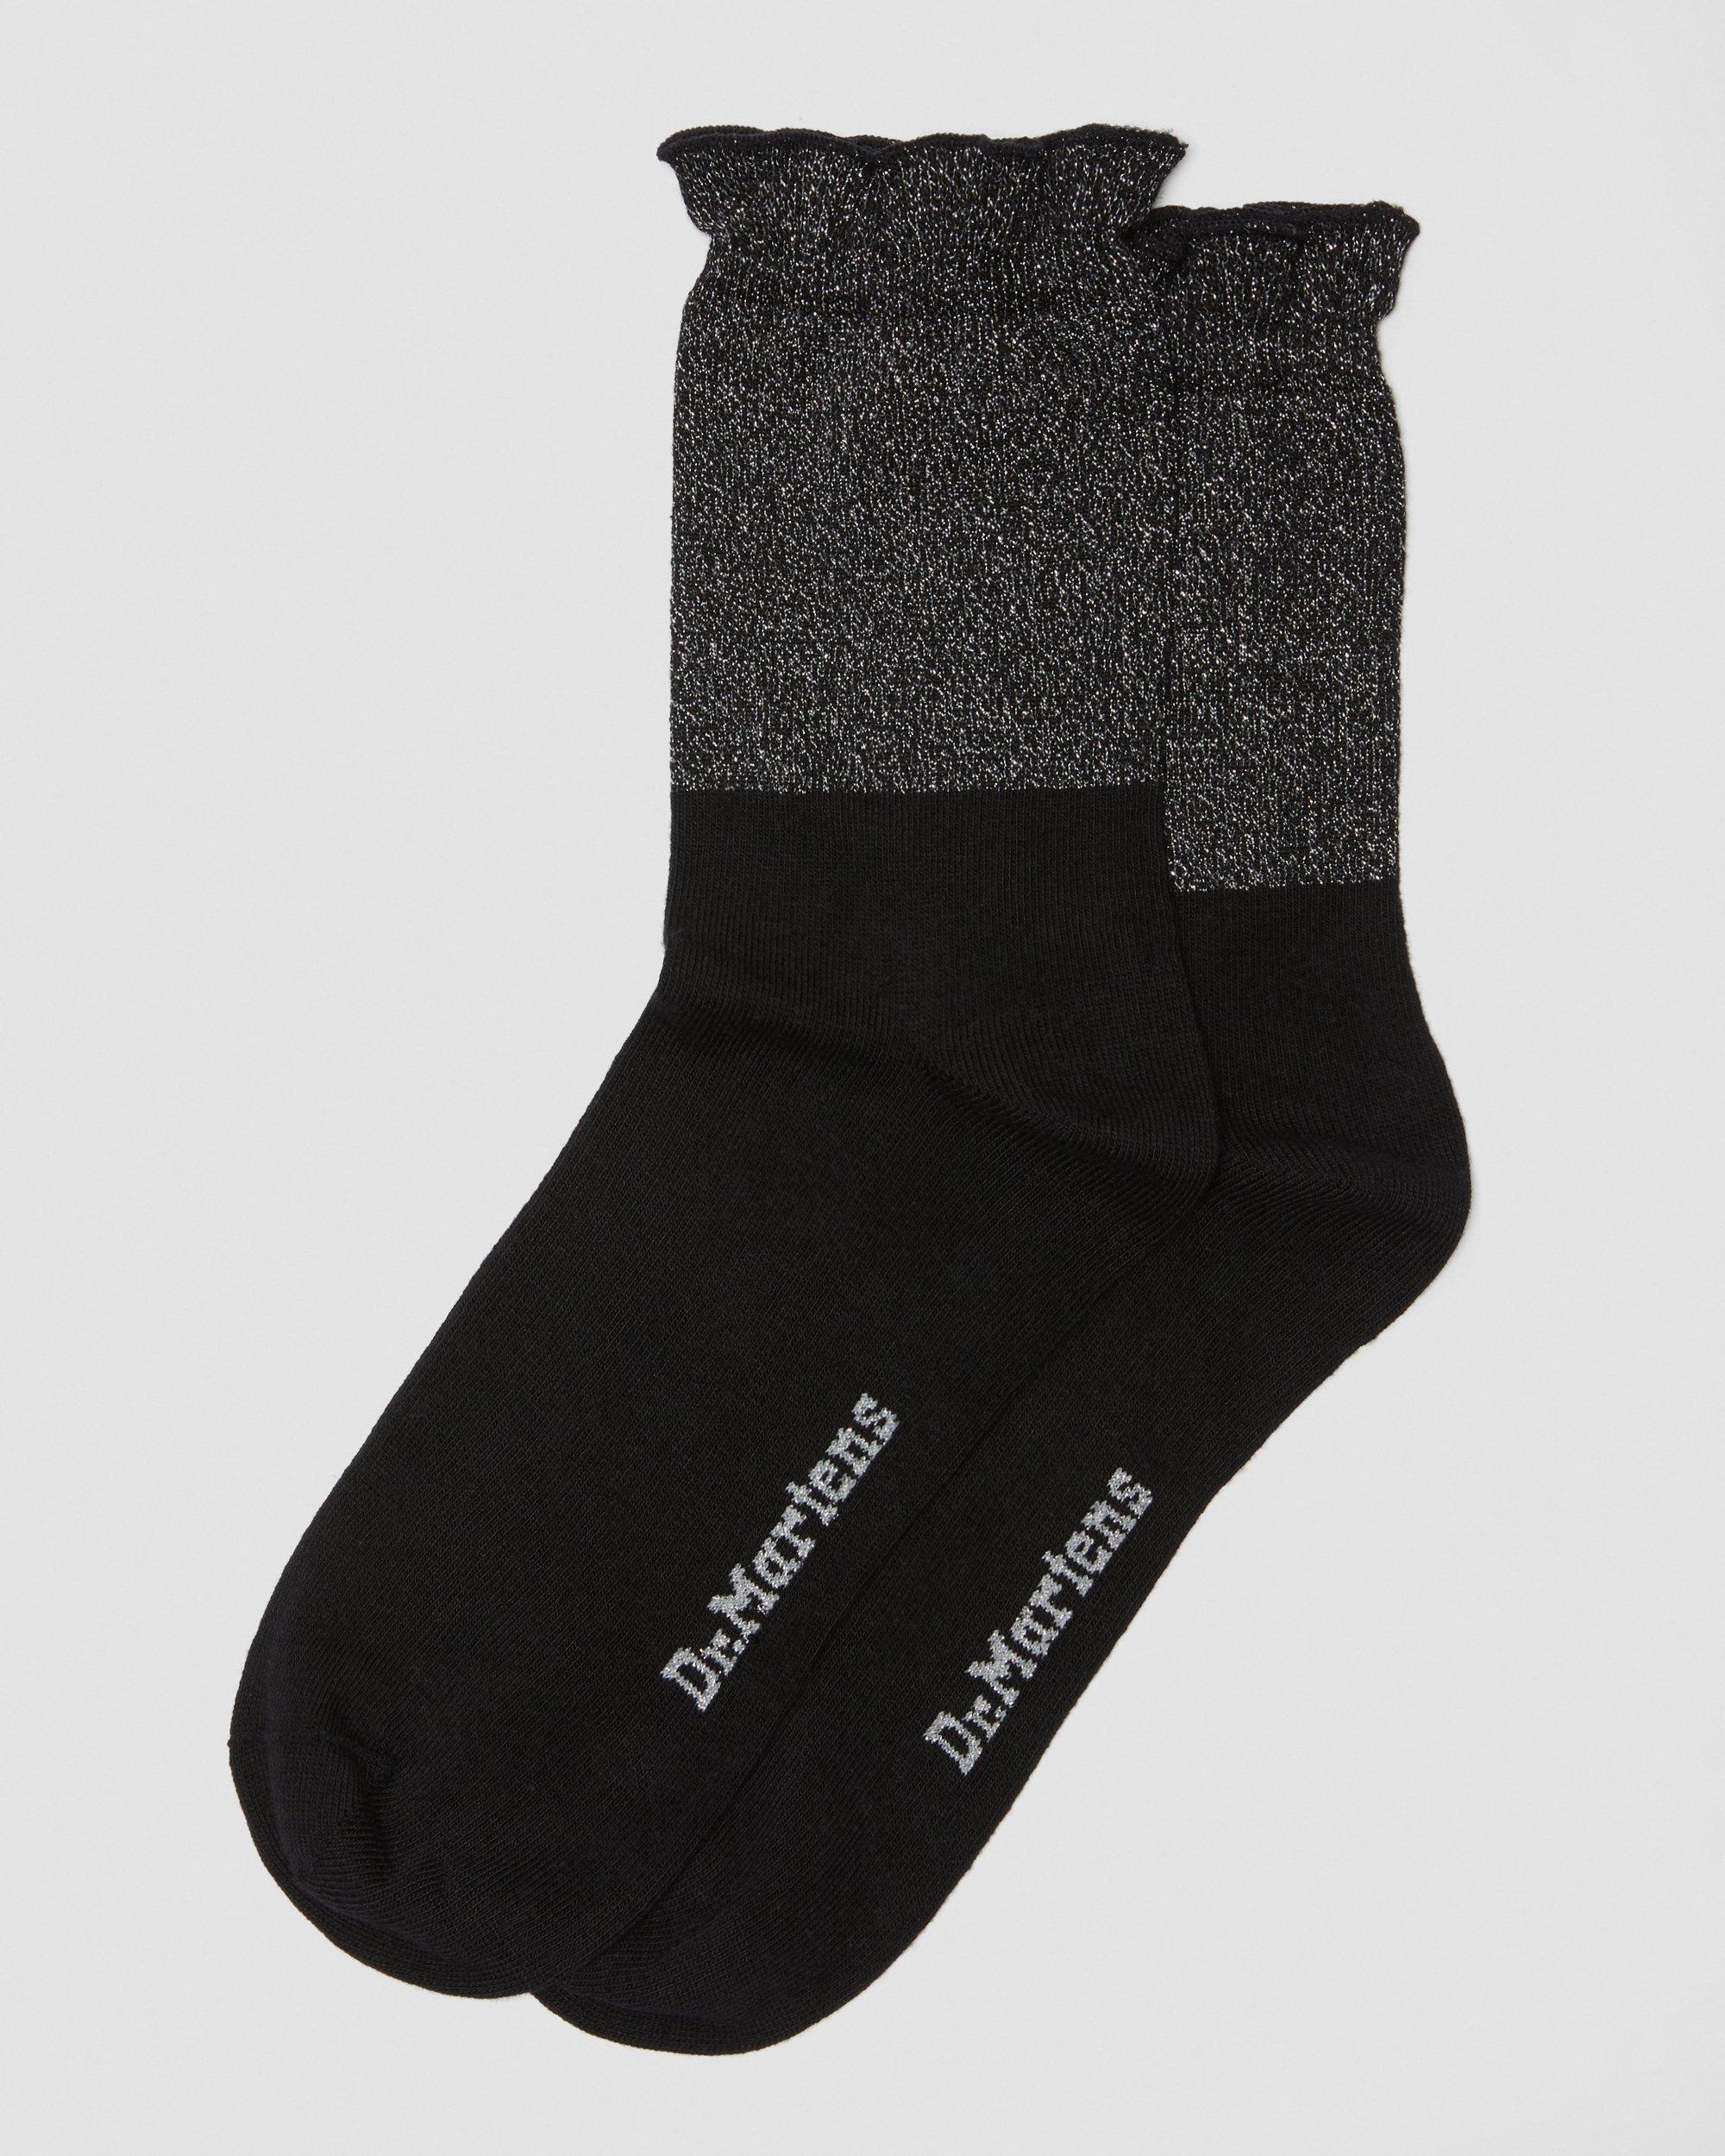 Iridescent Socks in Svart